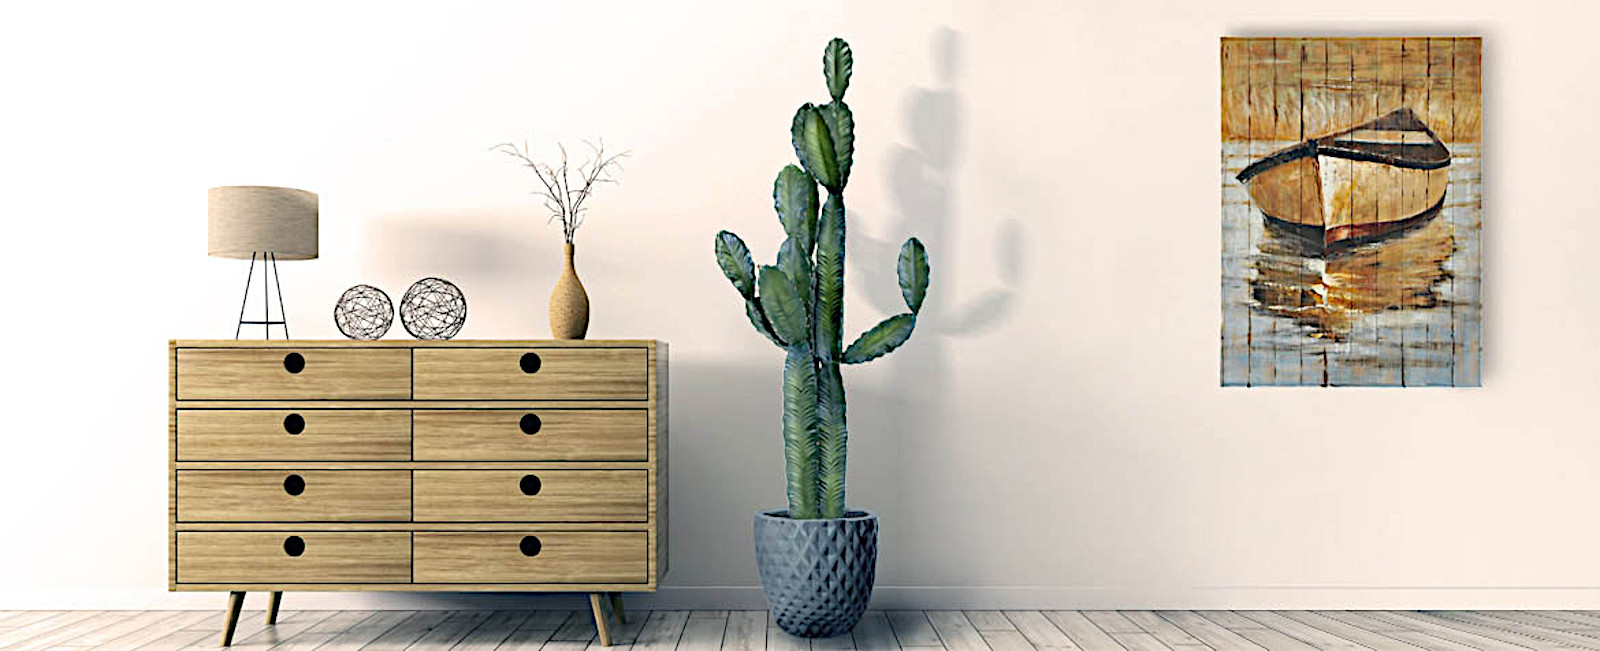 Deals artificial cactus